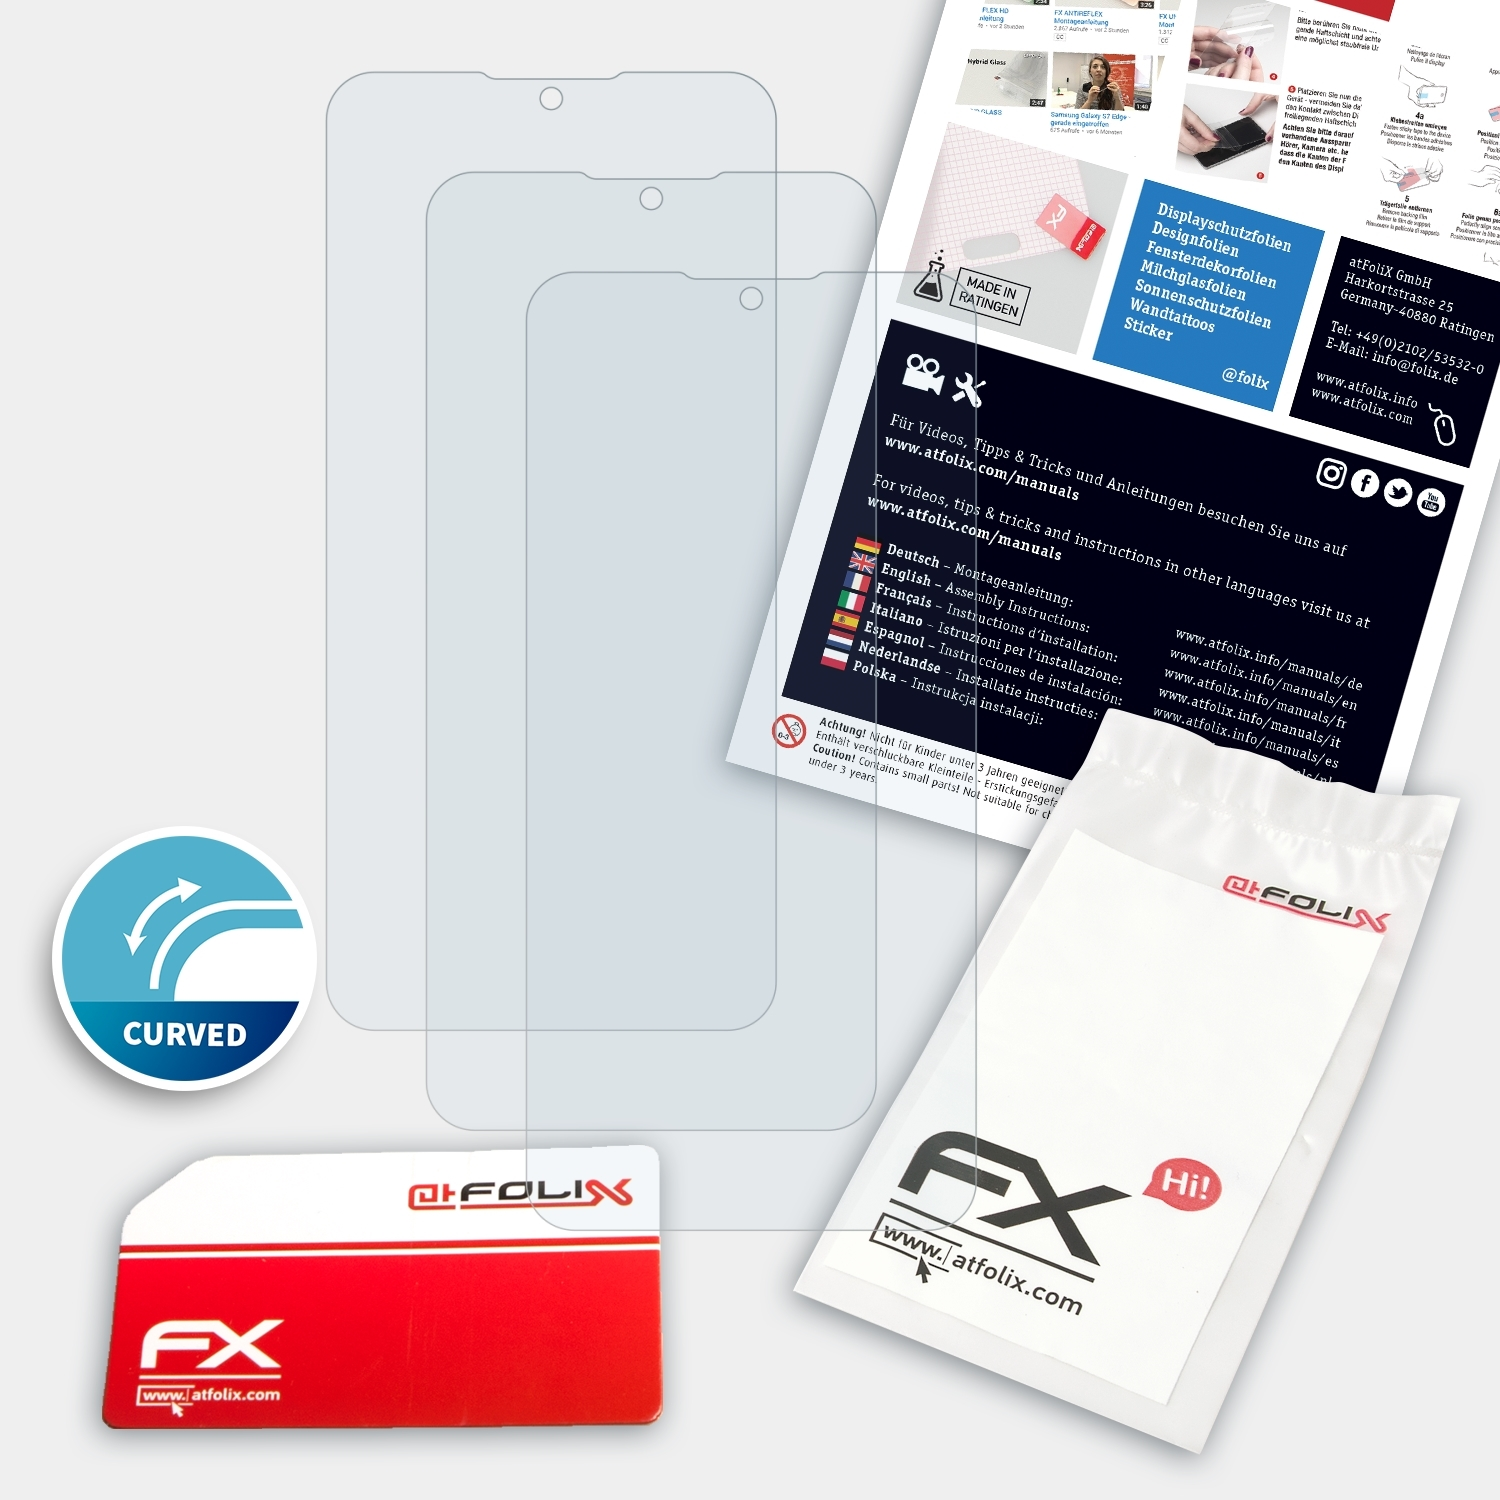 ATFOLIX 3x FX-ActiFleX Displayschutz(für Nuu Mobile Plus) X6